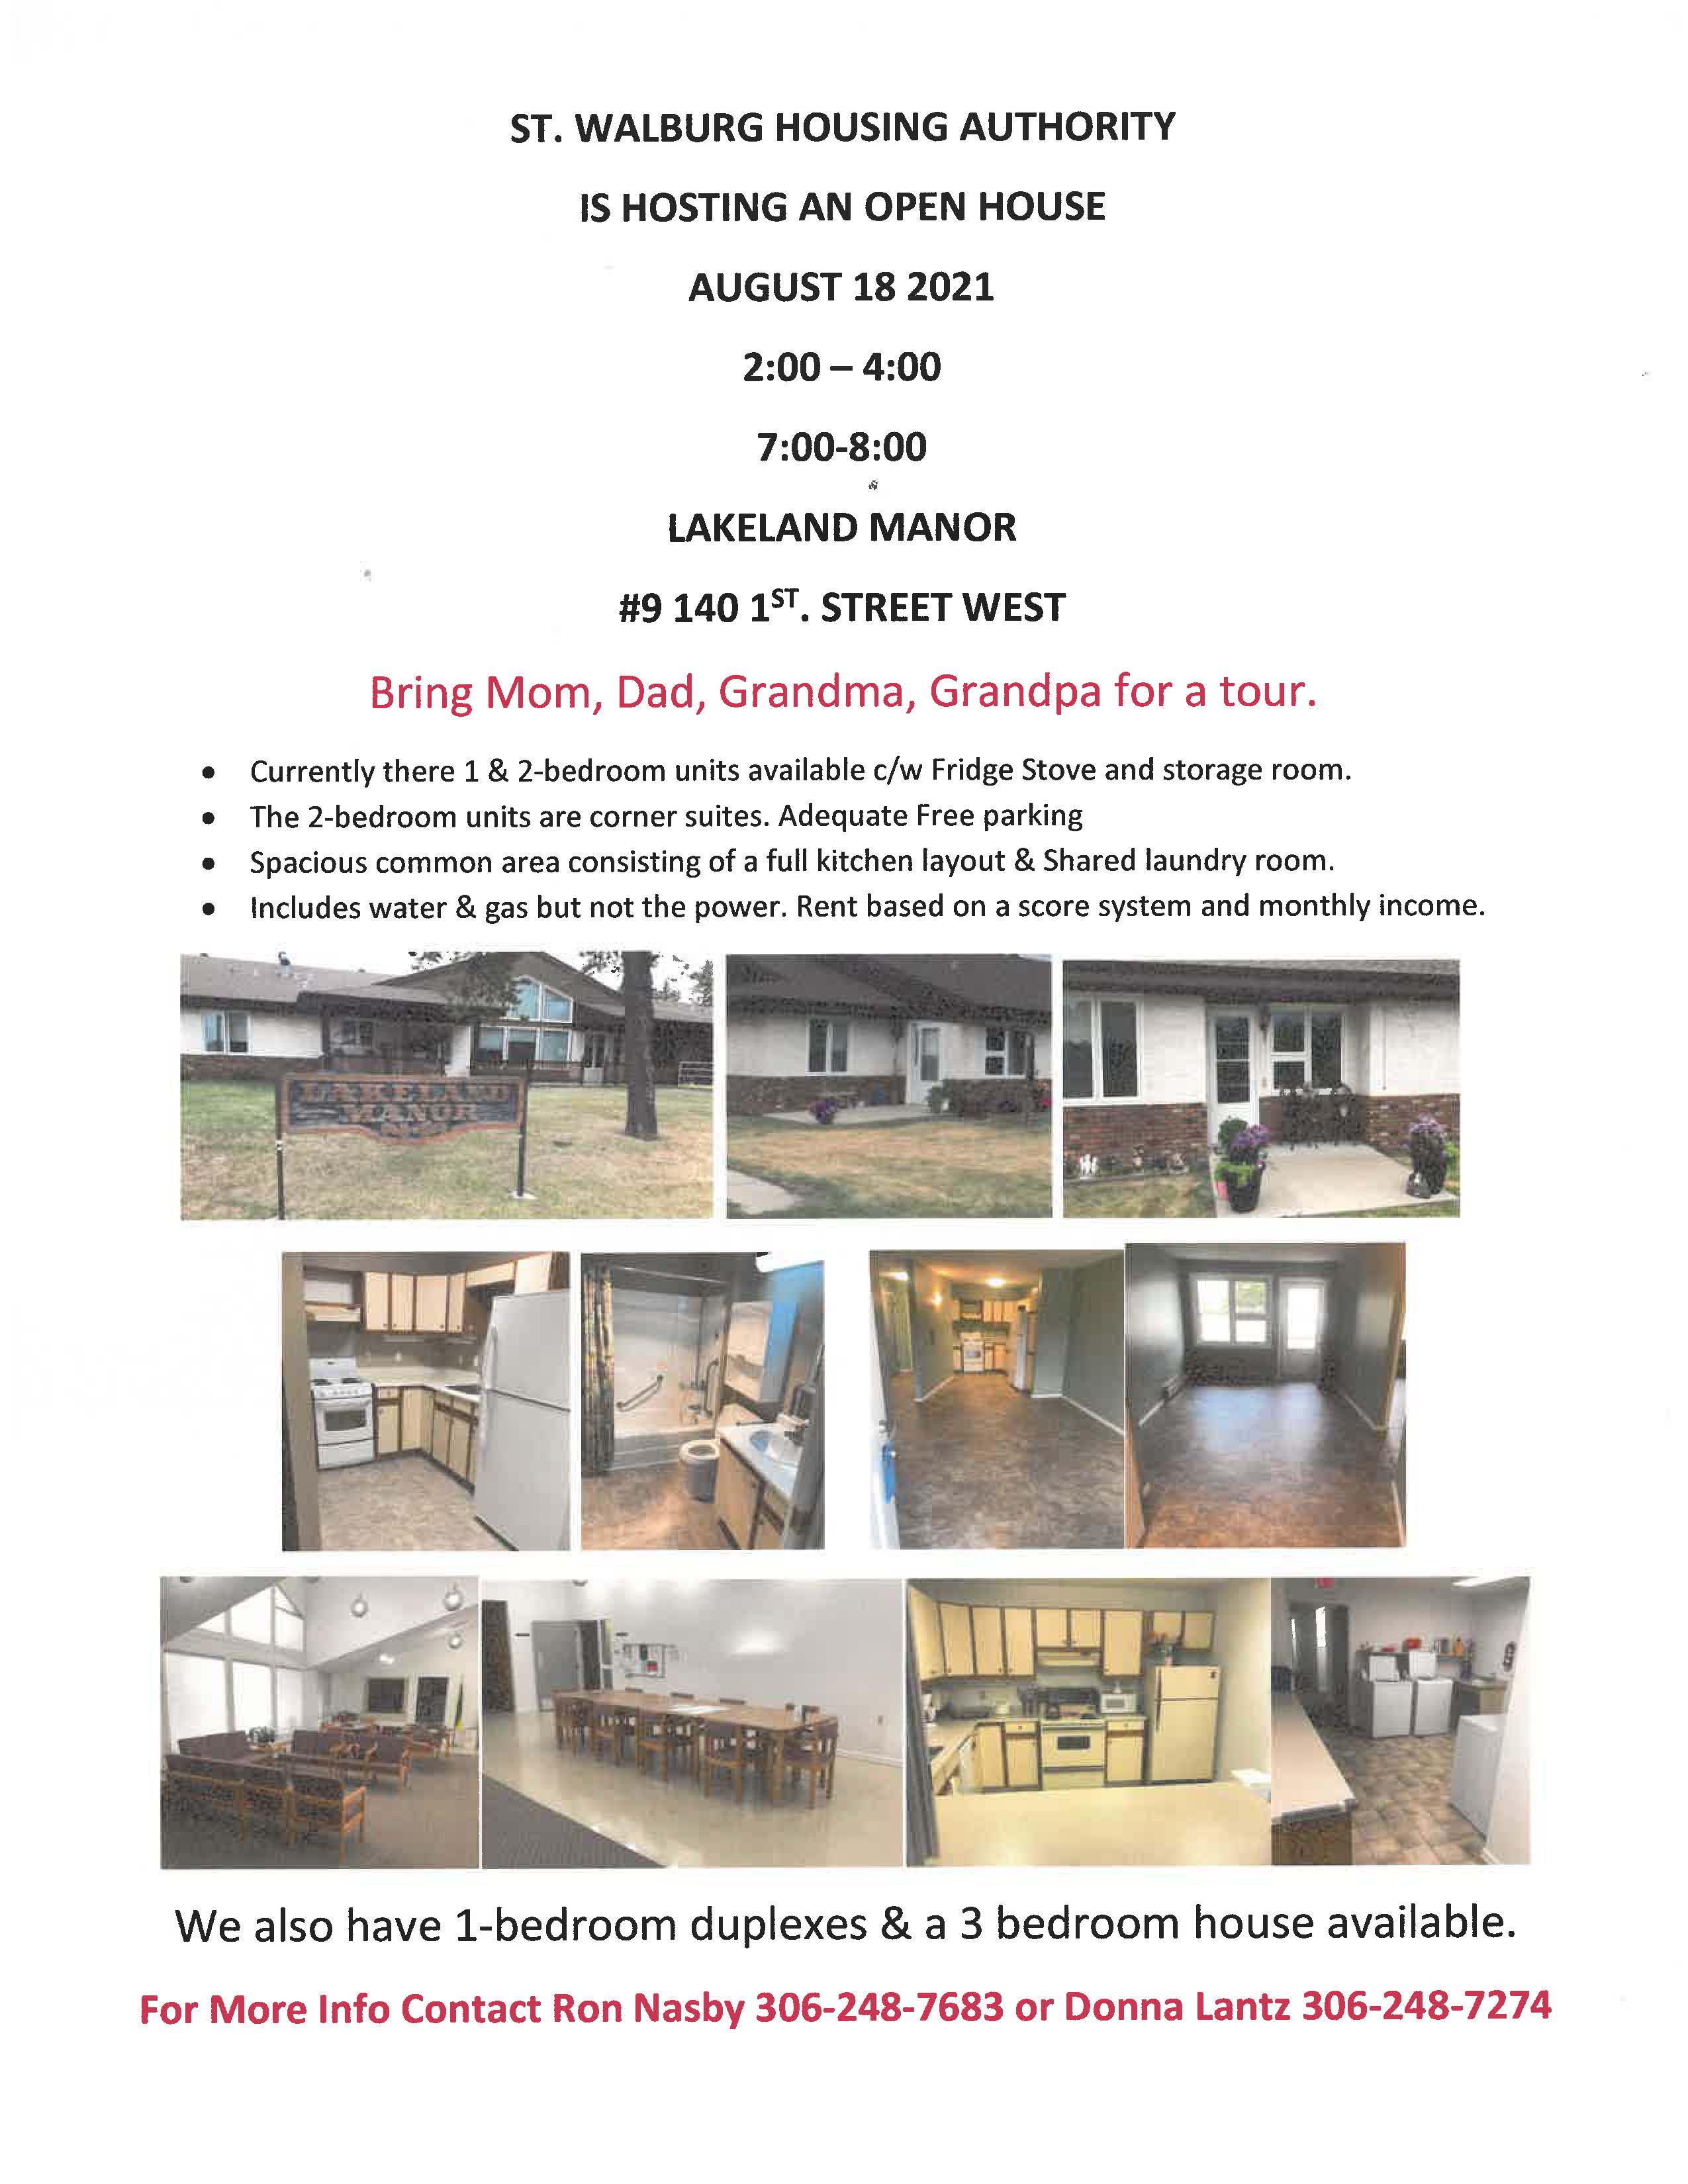 St. Walburg Housing Authority – Open House